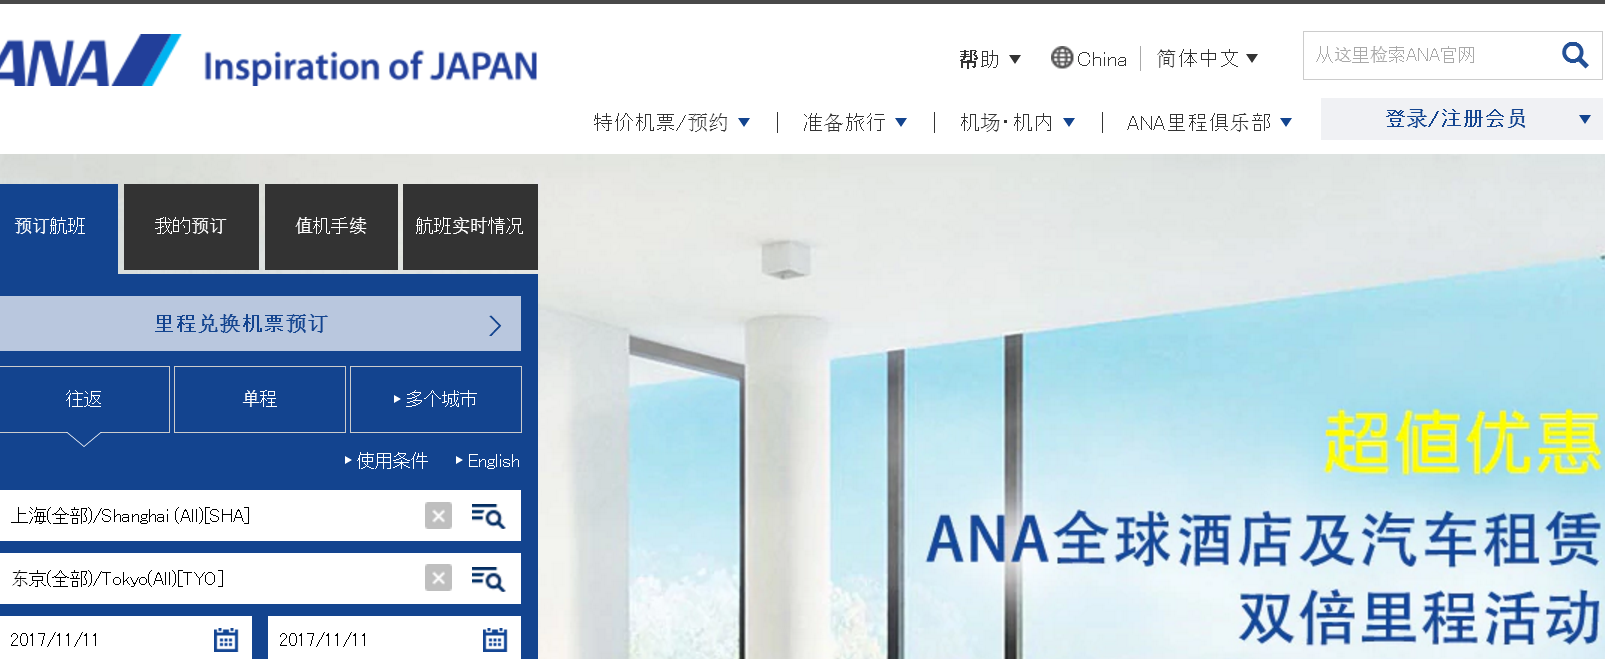 ANA:日本全日空航空公司官网 ana航空官网